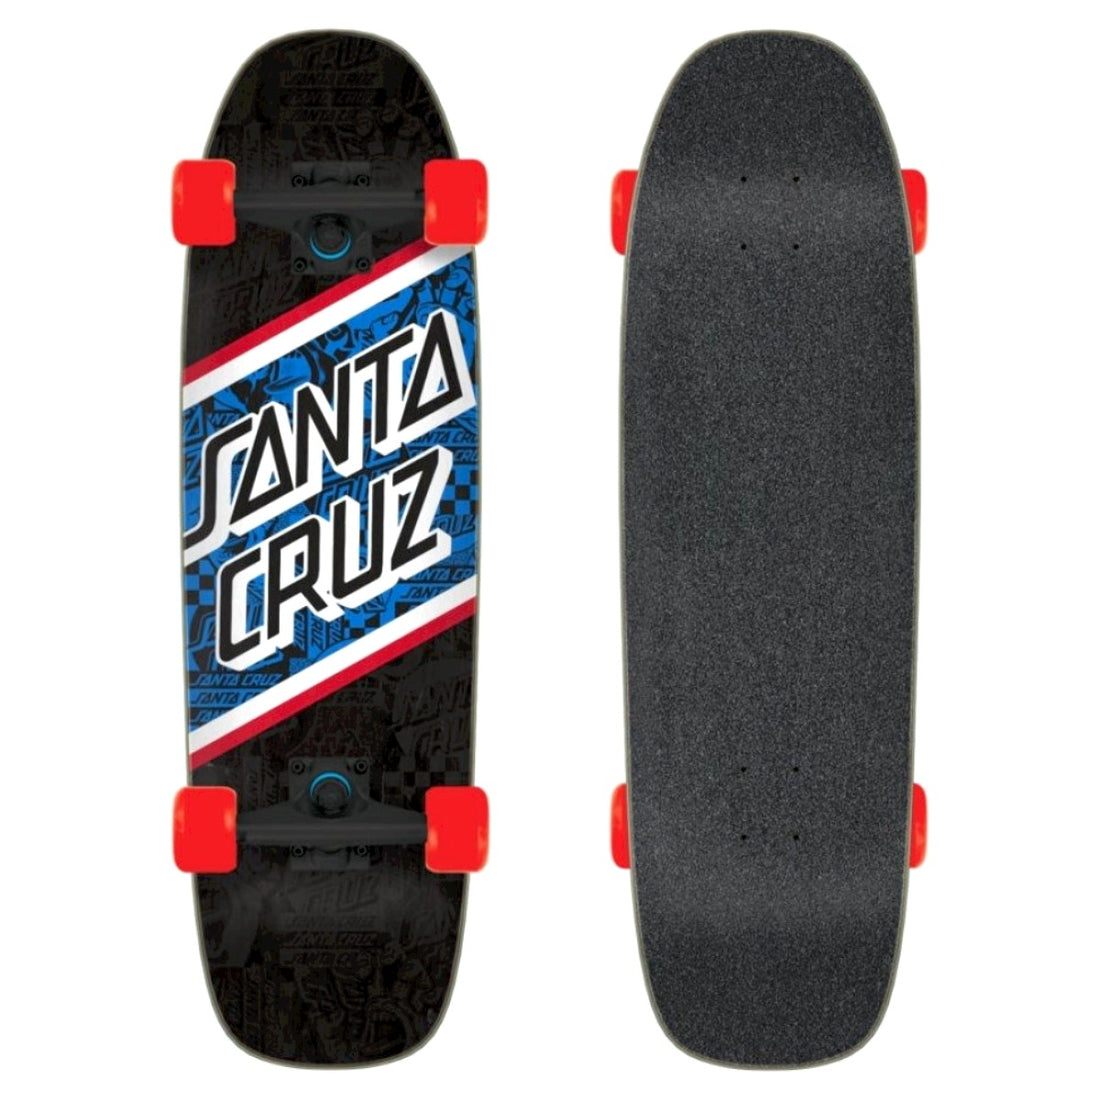 SANTA CRUZ CRUISER Flier Collage Street Skate Cruiser 8.4"